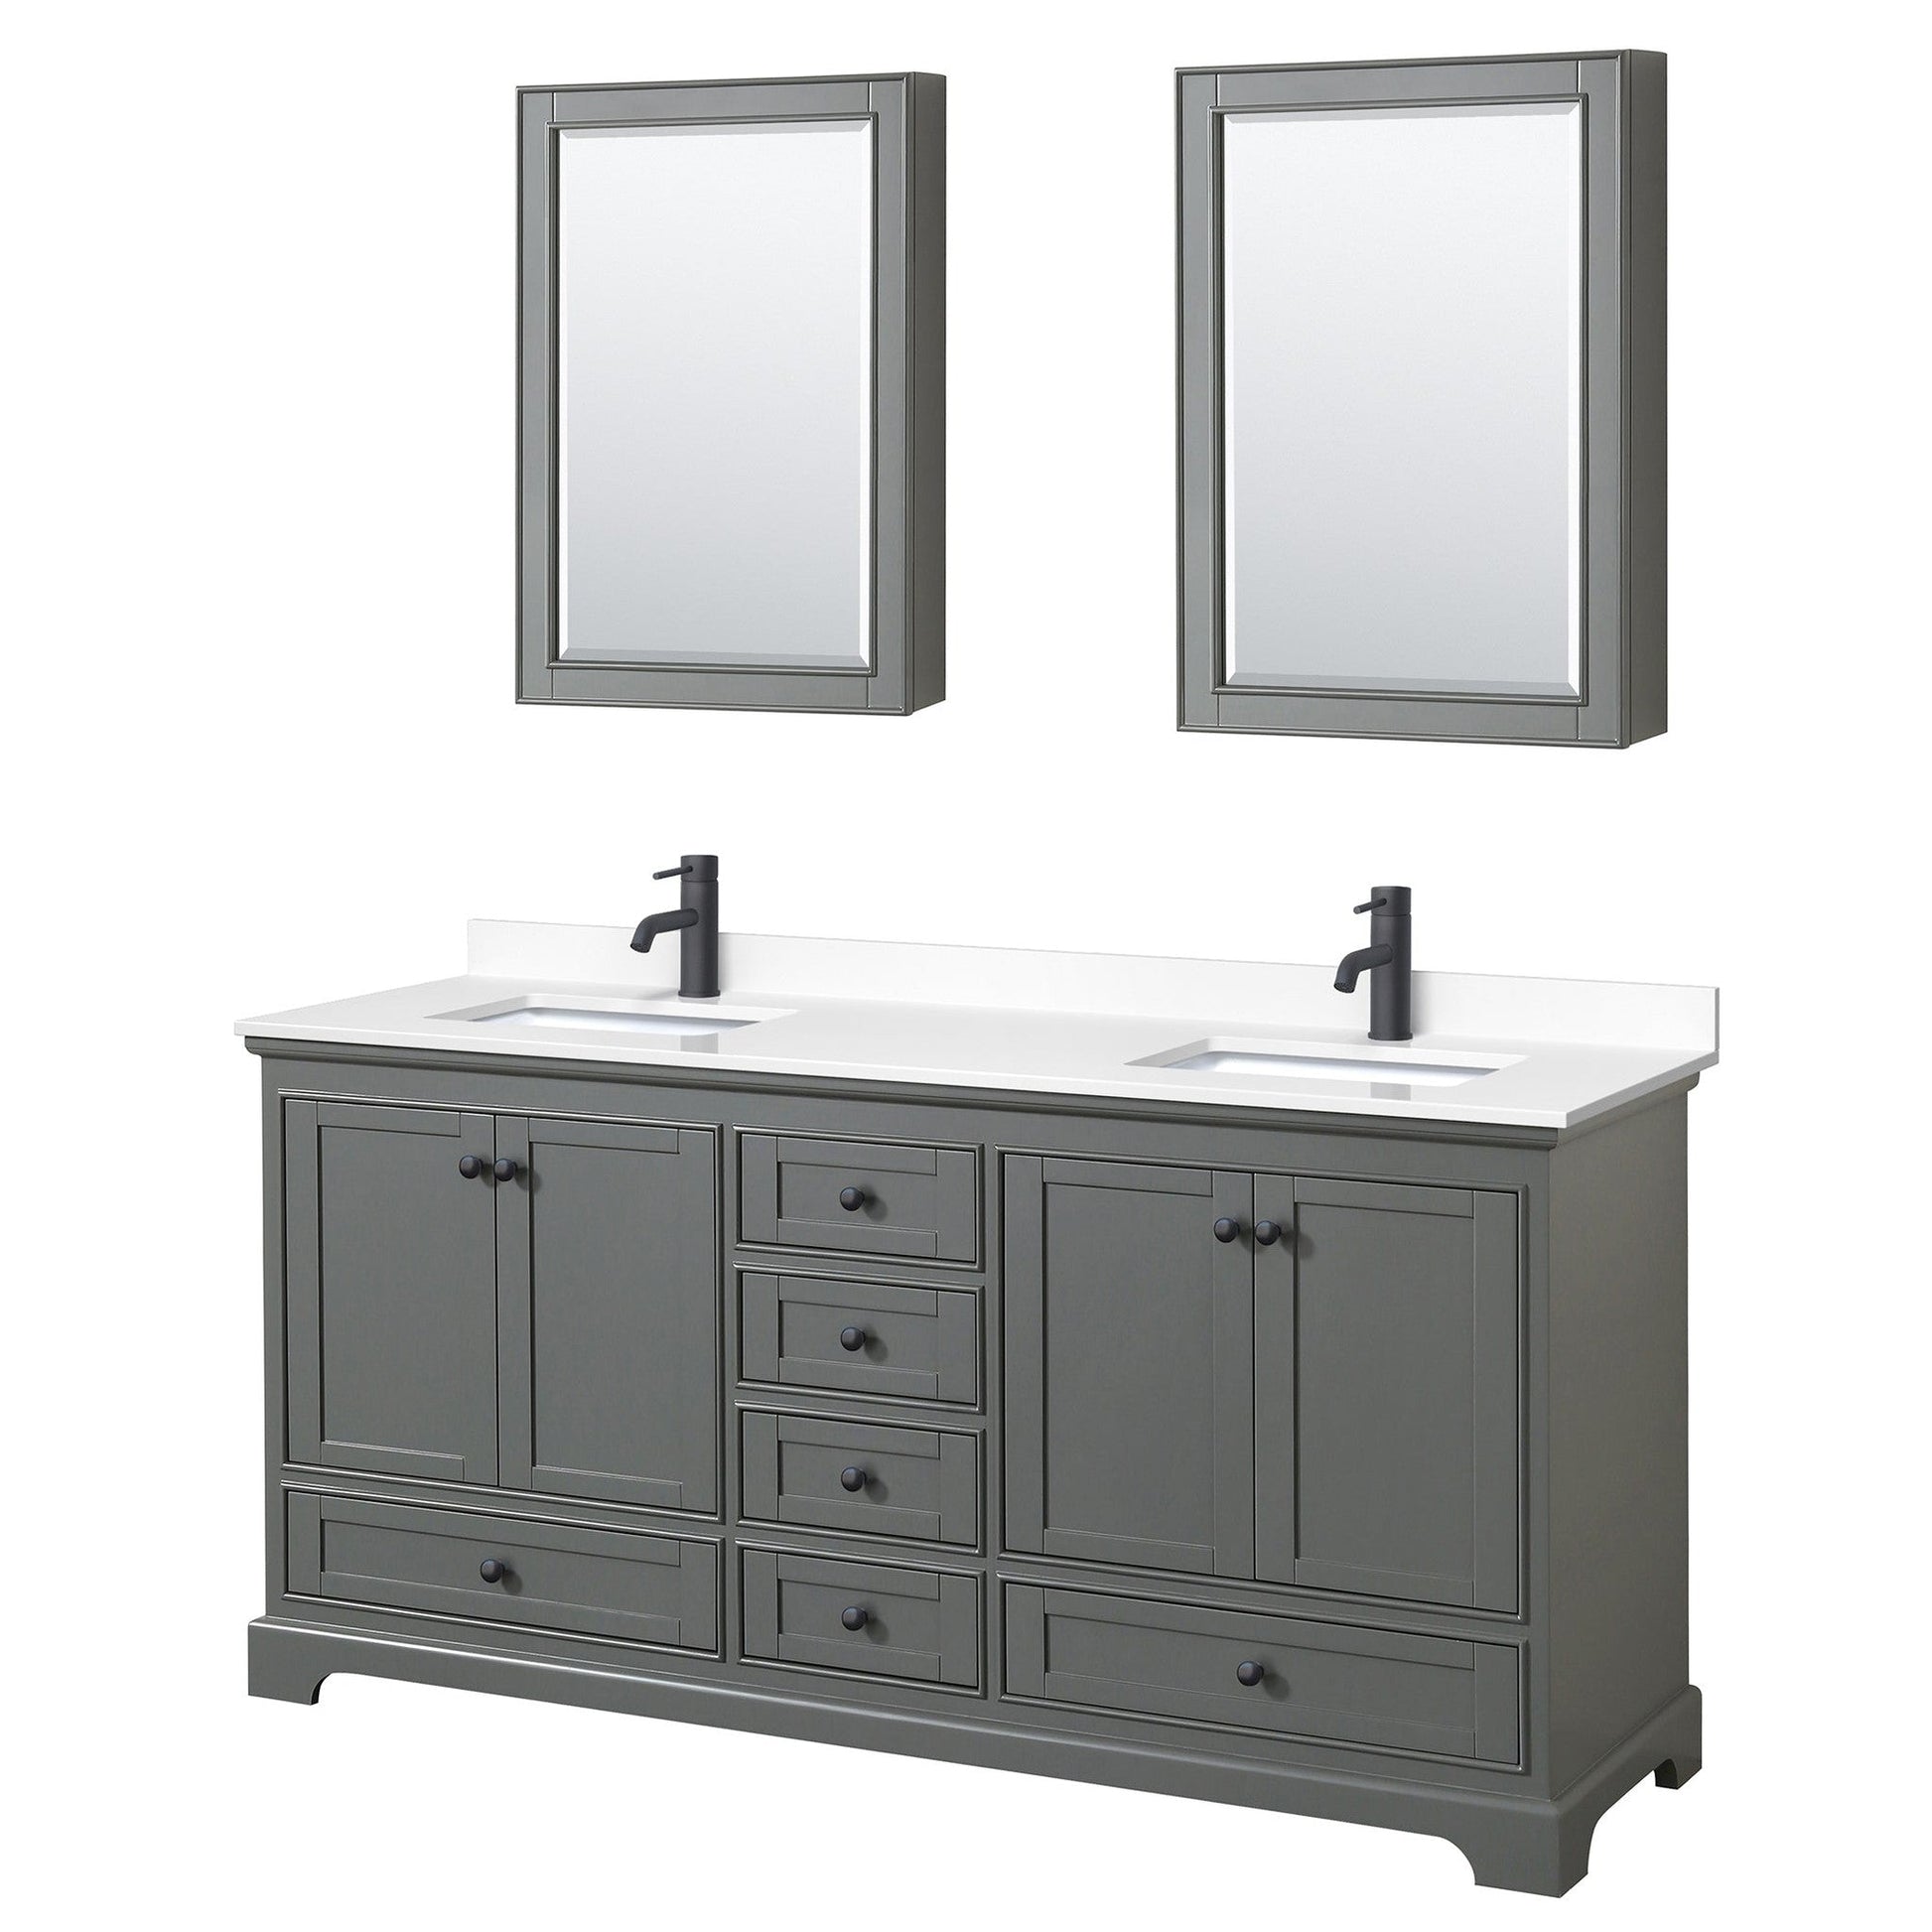 Deborah 72" Double Bathroom Vanity in Dark Gray, White Cultured Marble Countertop, Undermount Square Sinks, Matte Black Trim, Medicine Cabinets